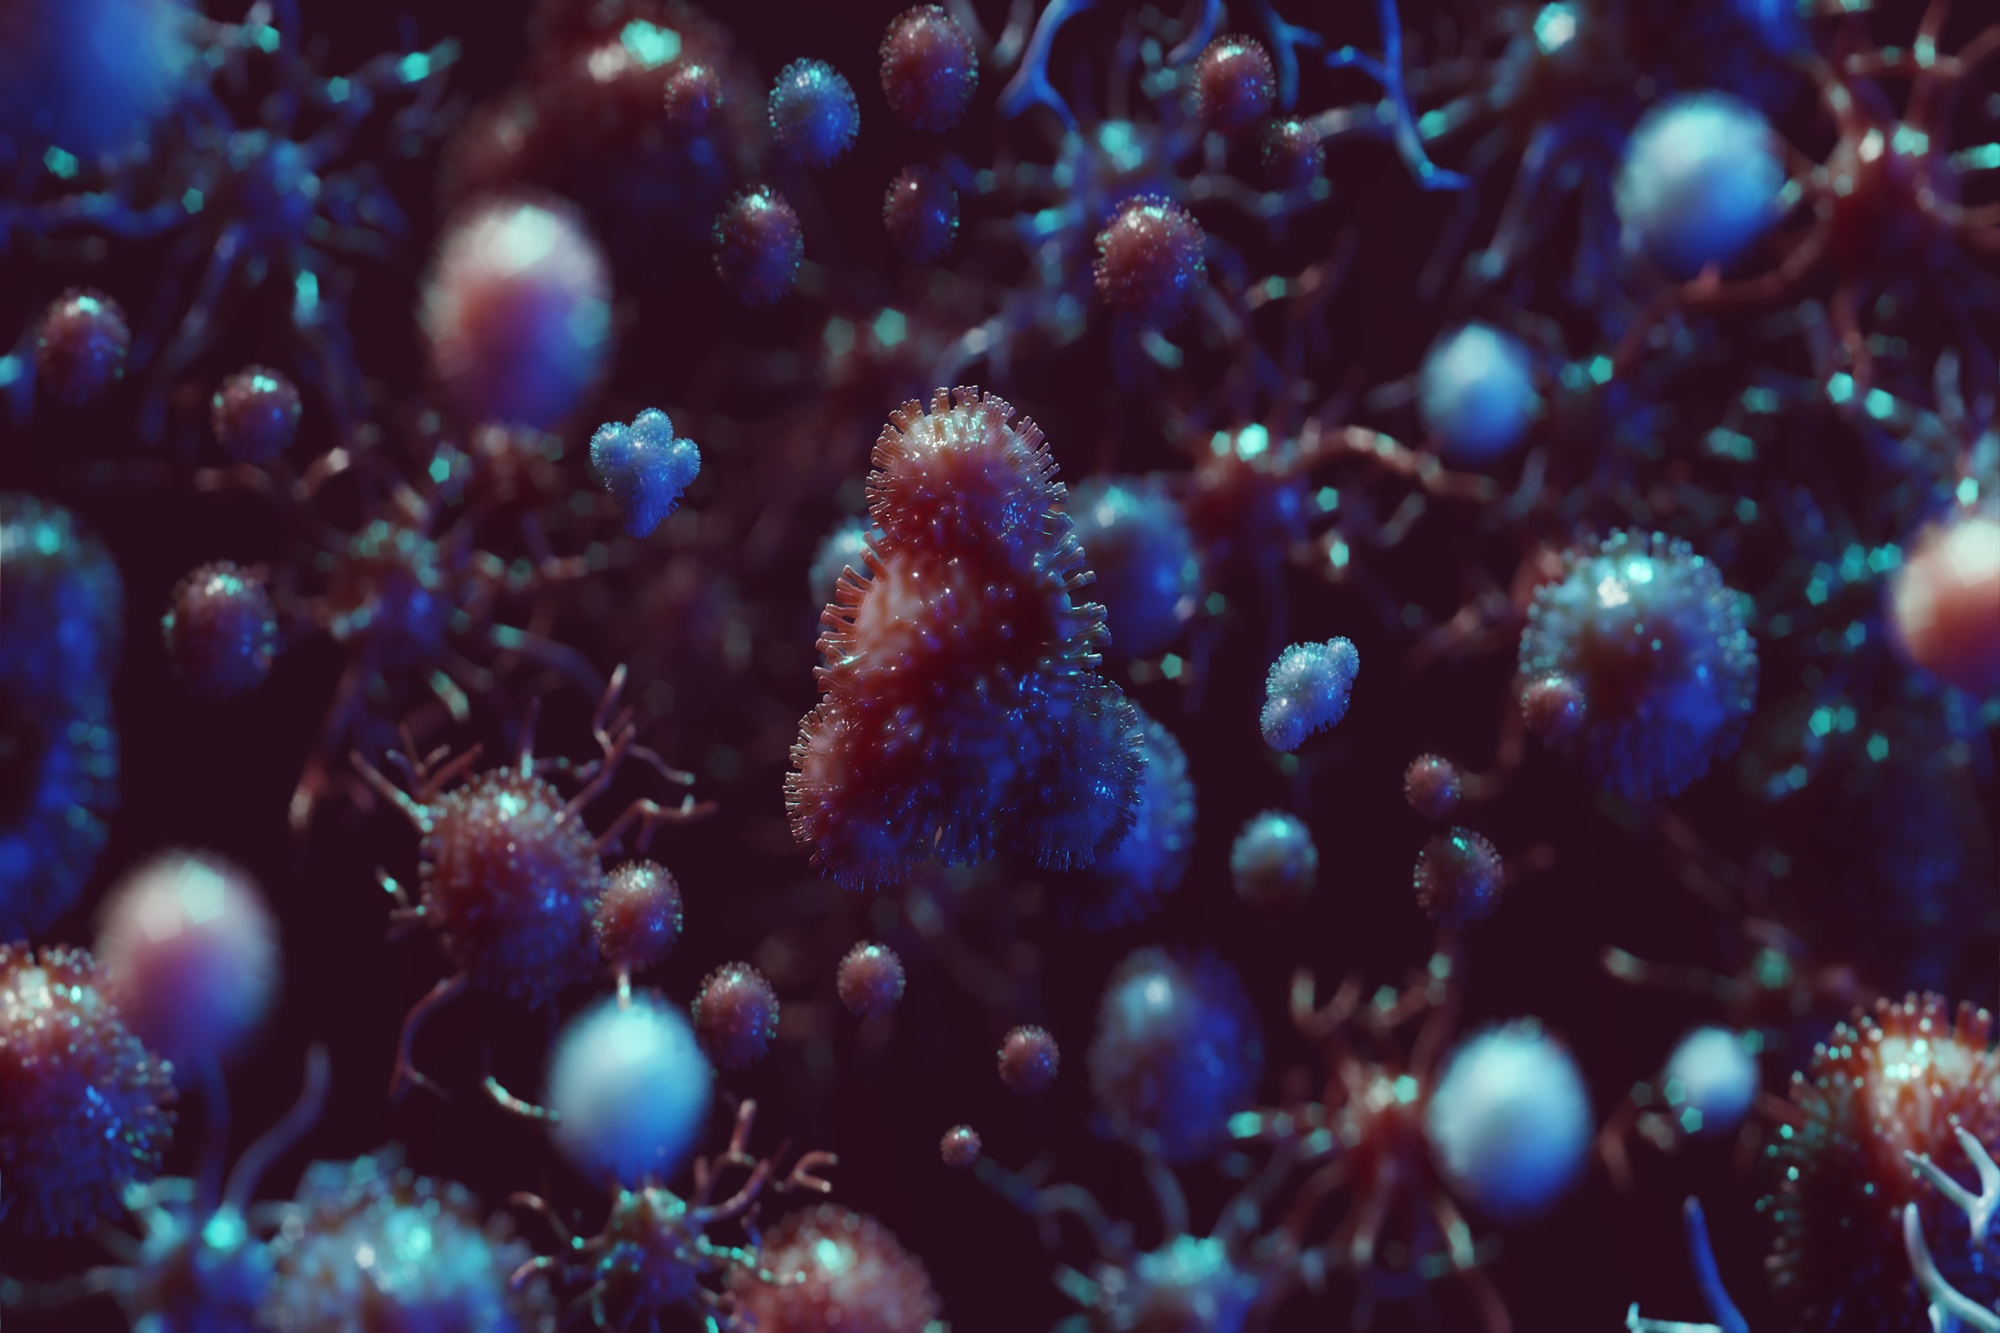 Viruses, coronavirus or bacteria cell in close up. 3D render of global crisis patogen